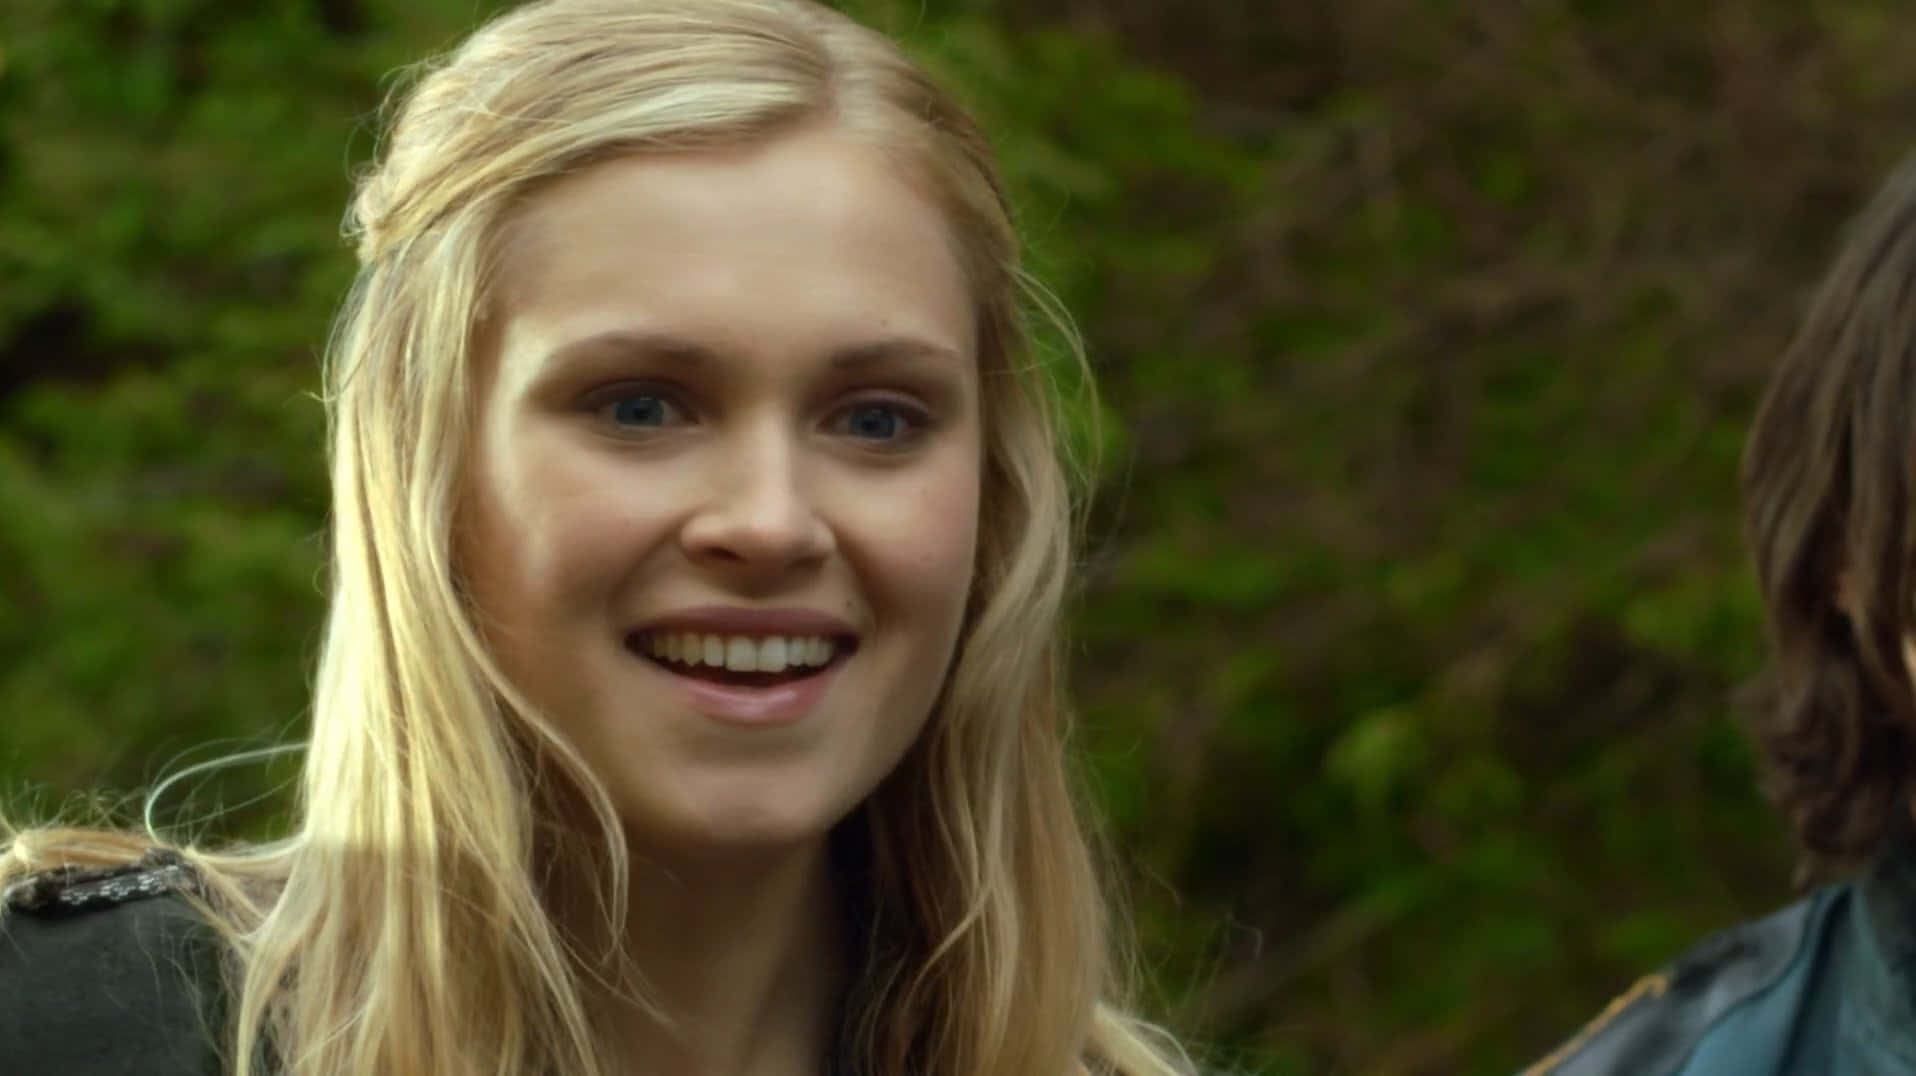 Blonde Actress Smiling Outdoors